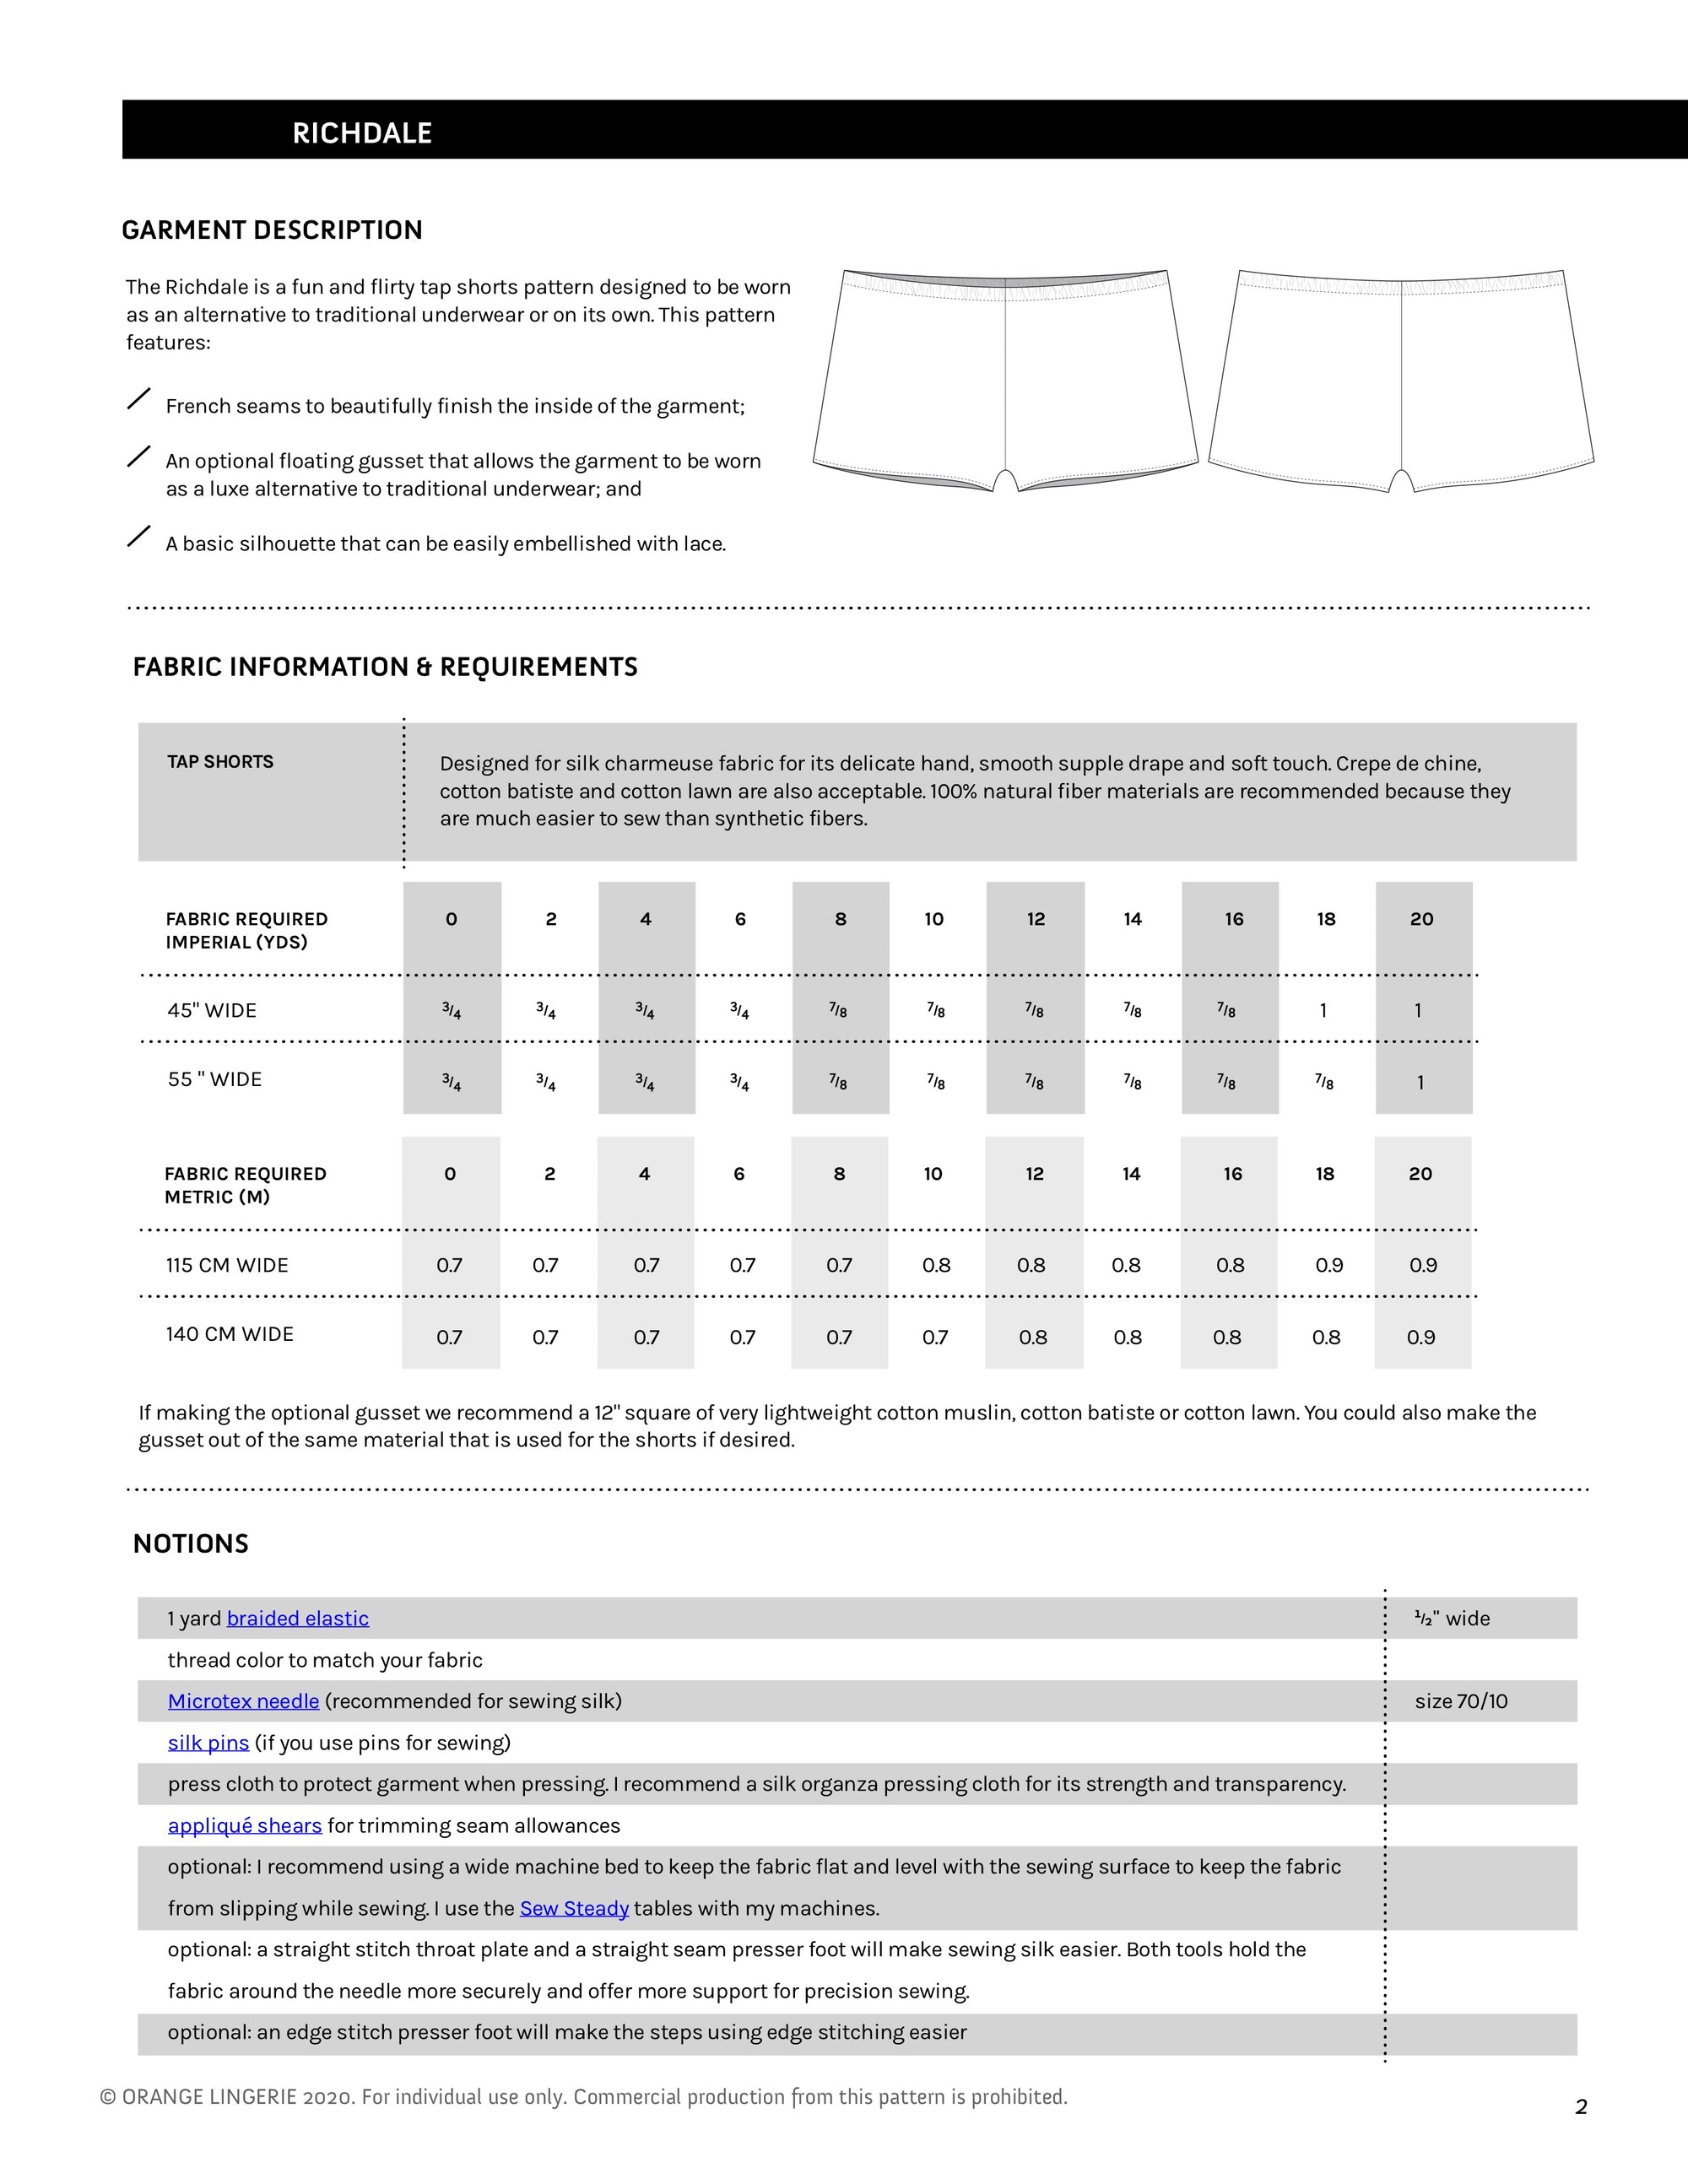 Beginner PDF Women's Elastic Waistband Pants Sewing Pattern, Instant  Download U.S Size 0,2,4,6,8,10,12,14 A0,A4, U.S 